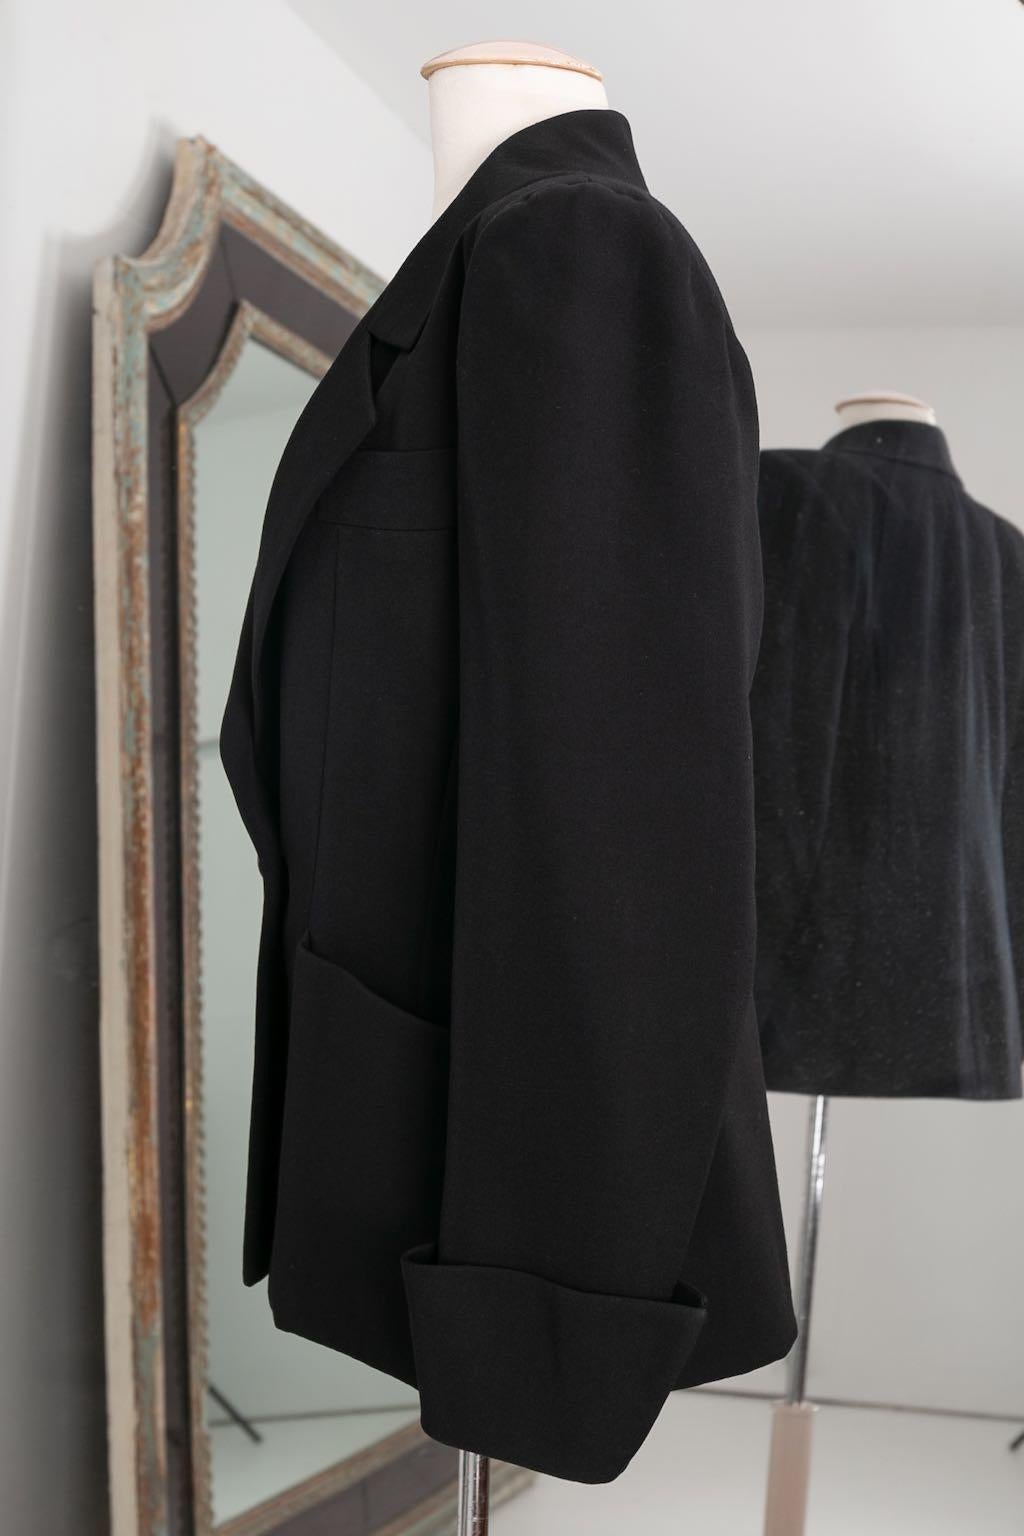 Yves Saint Laurent Haute Couture Black Skirt and Jacket Set, circa 1981/1982 10